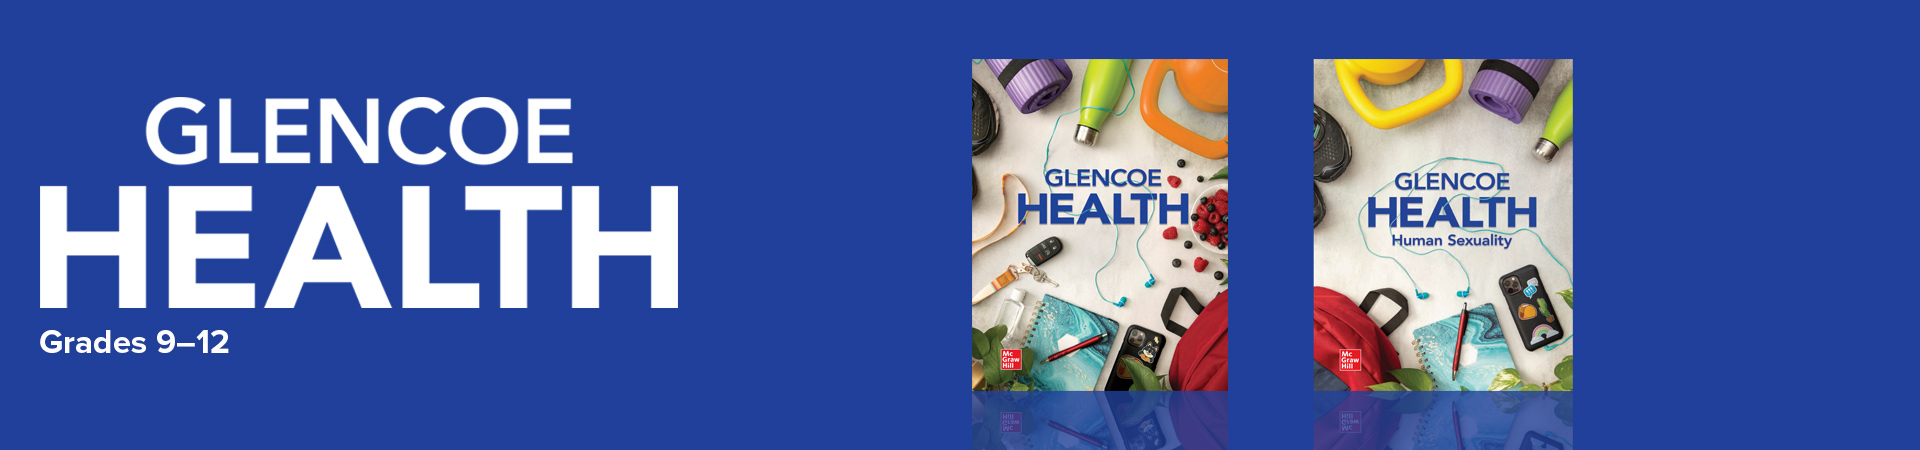 Glencoe Health logo and covers